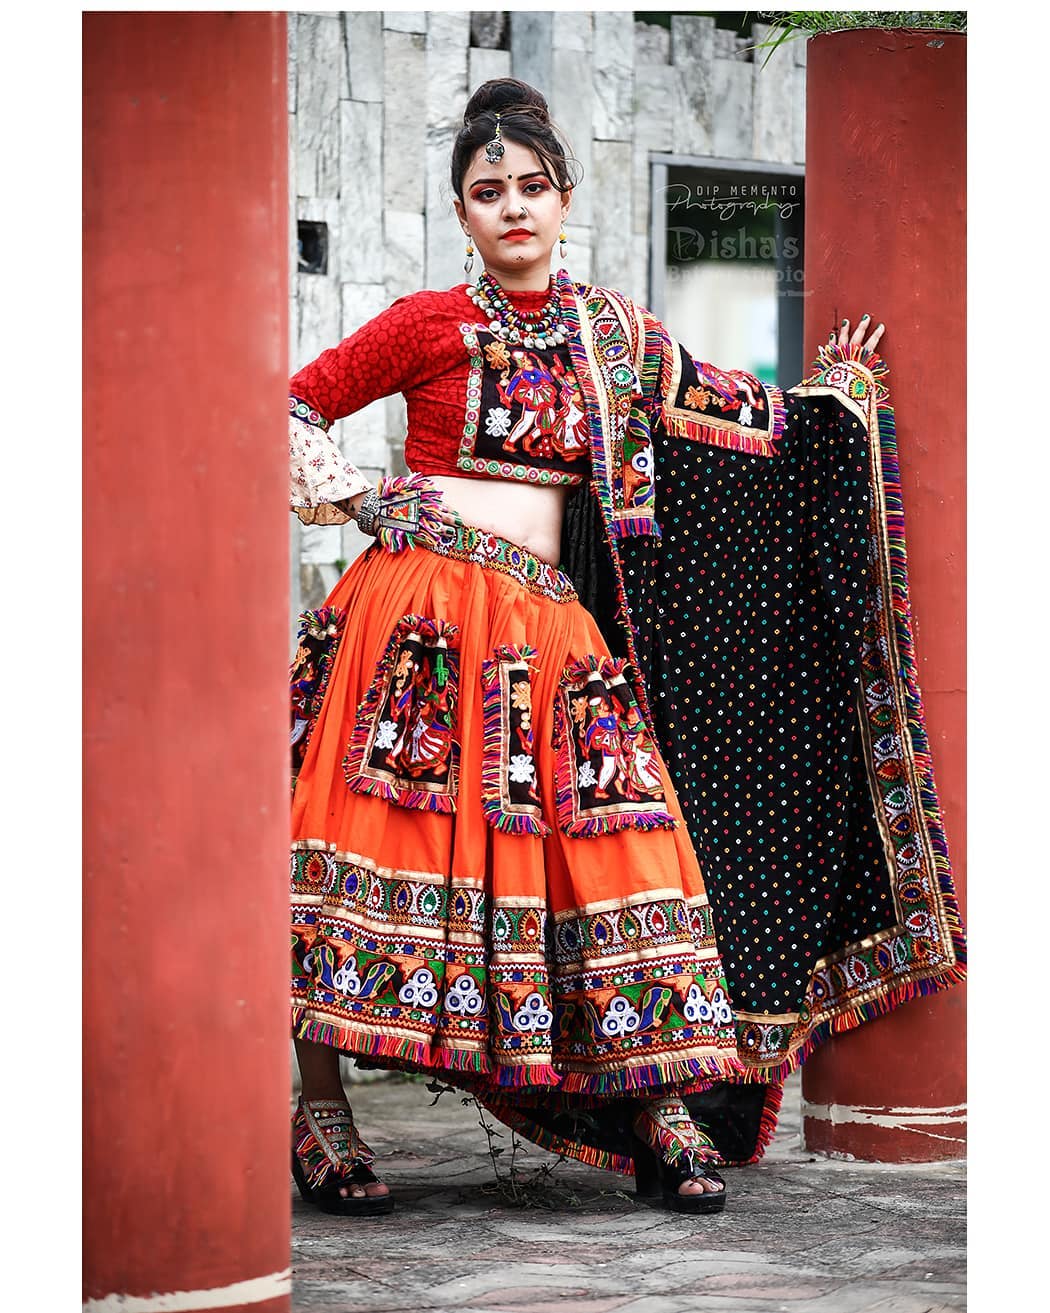 Let the world see 
The C O L O U R S and C U L T U R E 
of GUJARAT this #Navratri2019.
.
.
MUA: @dishabeautysaloonacademynikol @dishapanchal246 
Shoot: @dip_memento_photography
@meandmyphotography11
InFrame: @kajal_thakkar._0912
Jewellery: @nancyhandicraft9
Costume by: @rashmithummar .
.
#photoshoot #ethnic #traditionalart #ahmedabad #gujarati  #pop #makeup #navratrichaniyacholi #chaniyacholi #indianfashionblogger  #fashionblogger #makeuptutorial #weddingdress #sexy#instagram #instapic #bollywood #bollywoodhotness #bollywoodactresses #indian #pic #picoftheday #photooftheday #instagood#instamood #festivalofnations #festival #9924227745 #dipmementophotography #dip_memento_photography